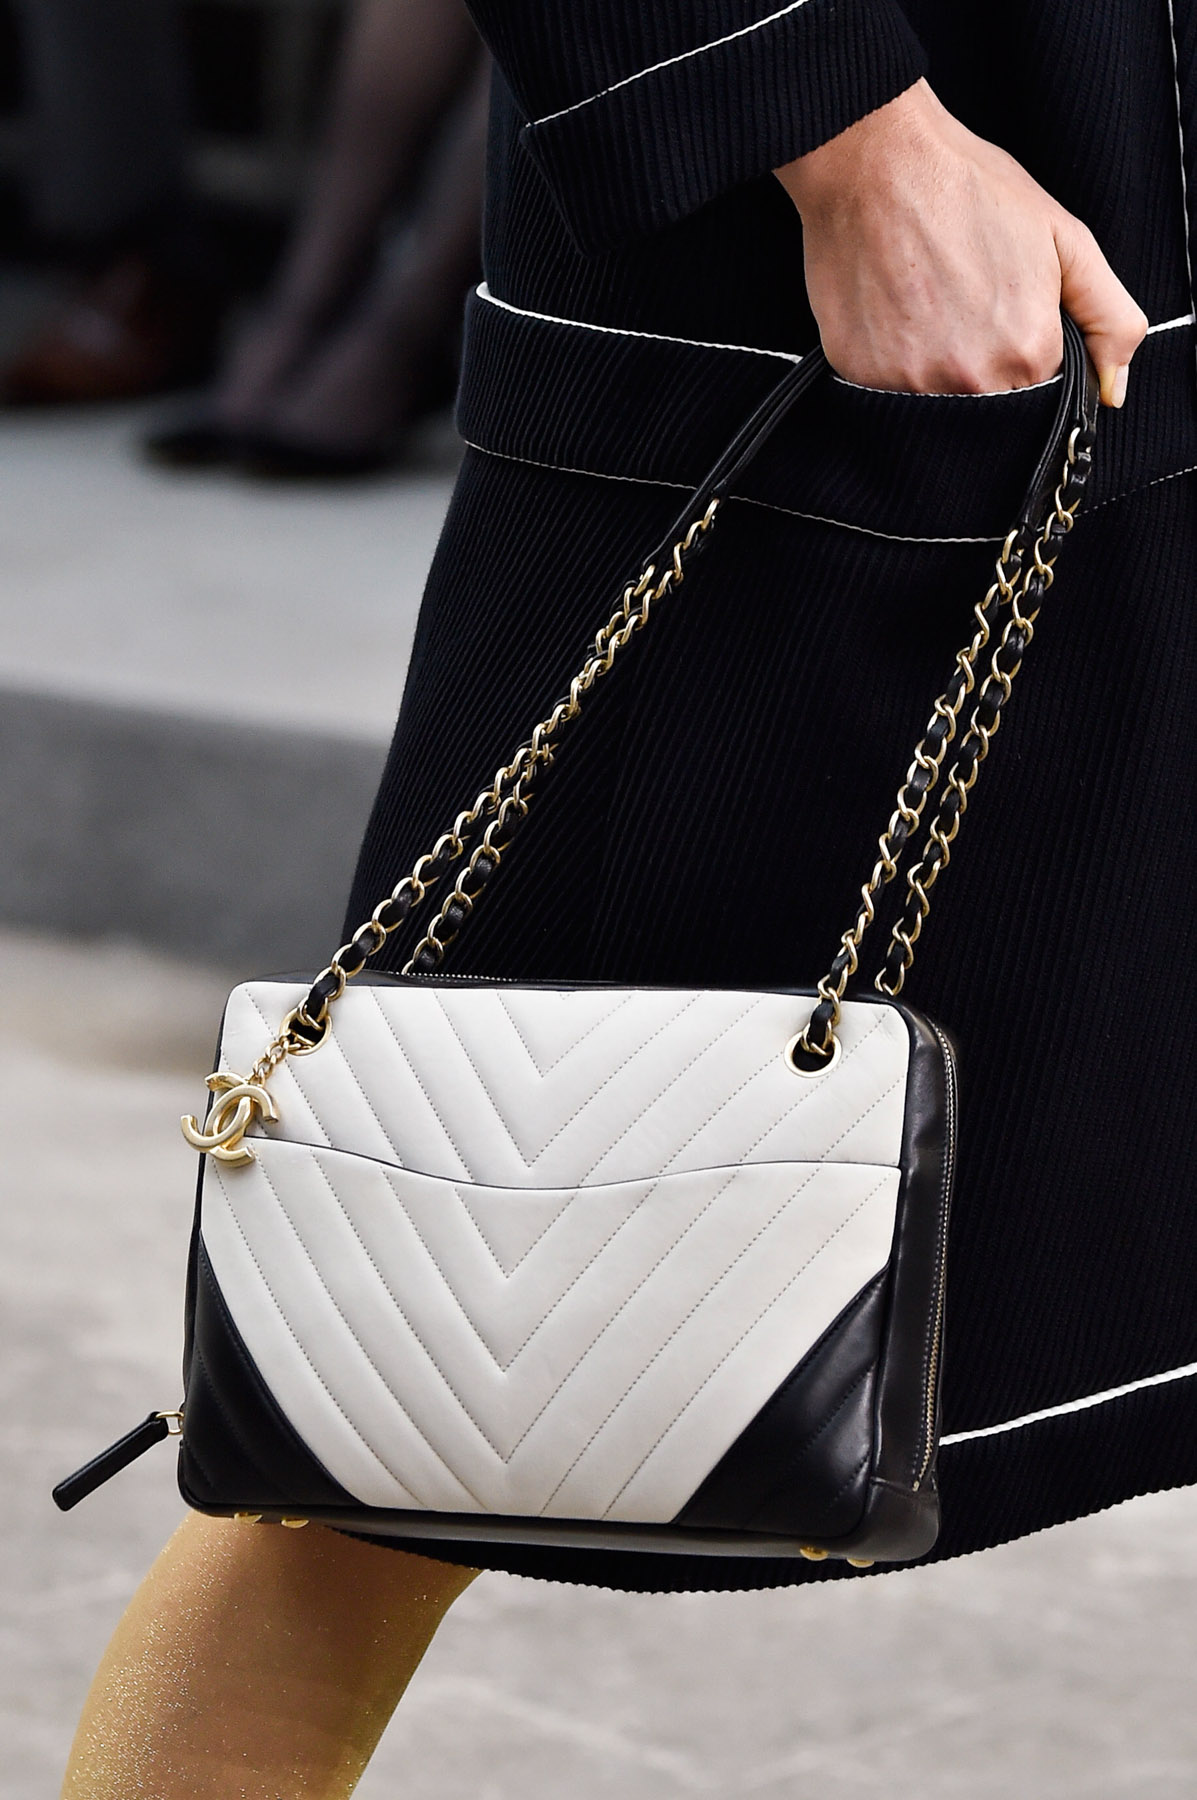 Chanel-detalhes-verao2015-paris-28